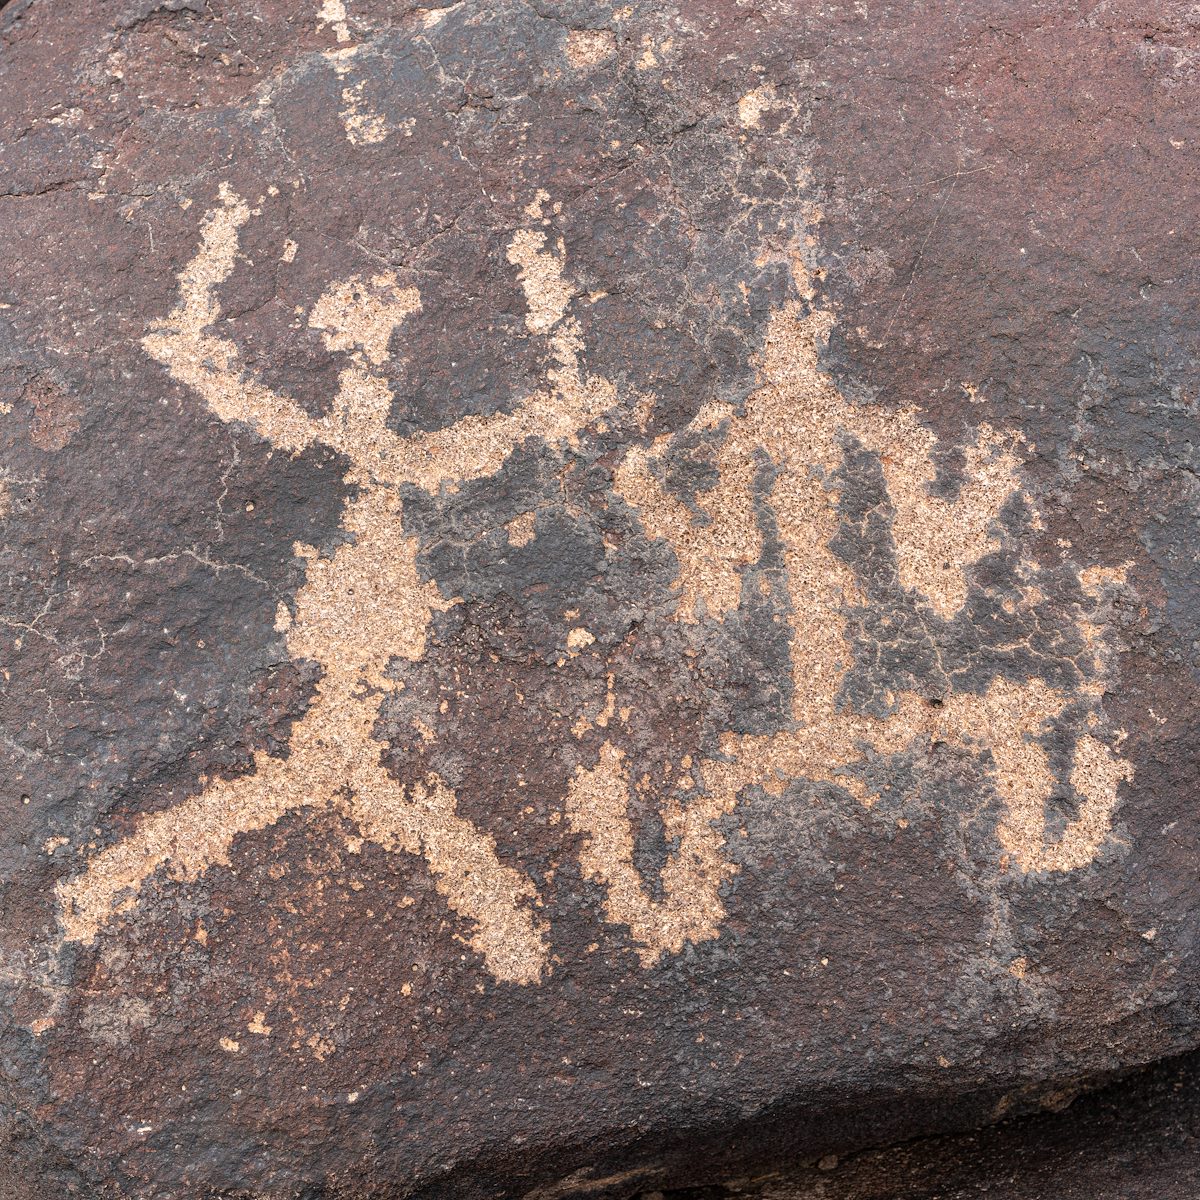 2021 January Ironwood East Petroglyph 05